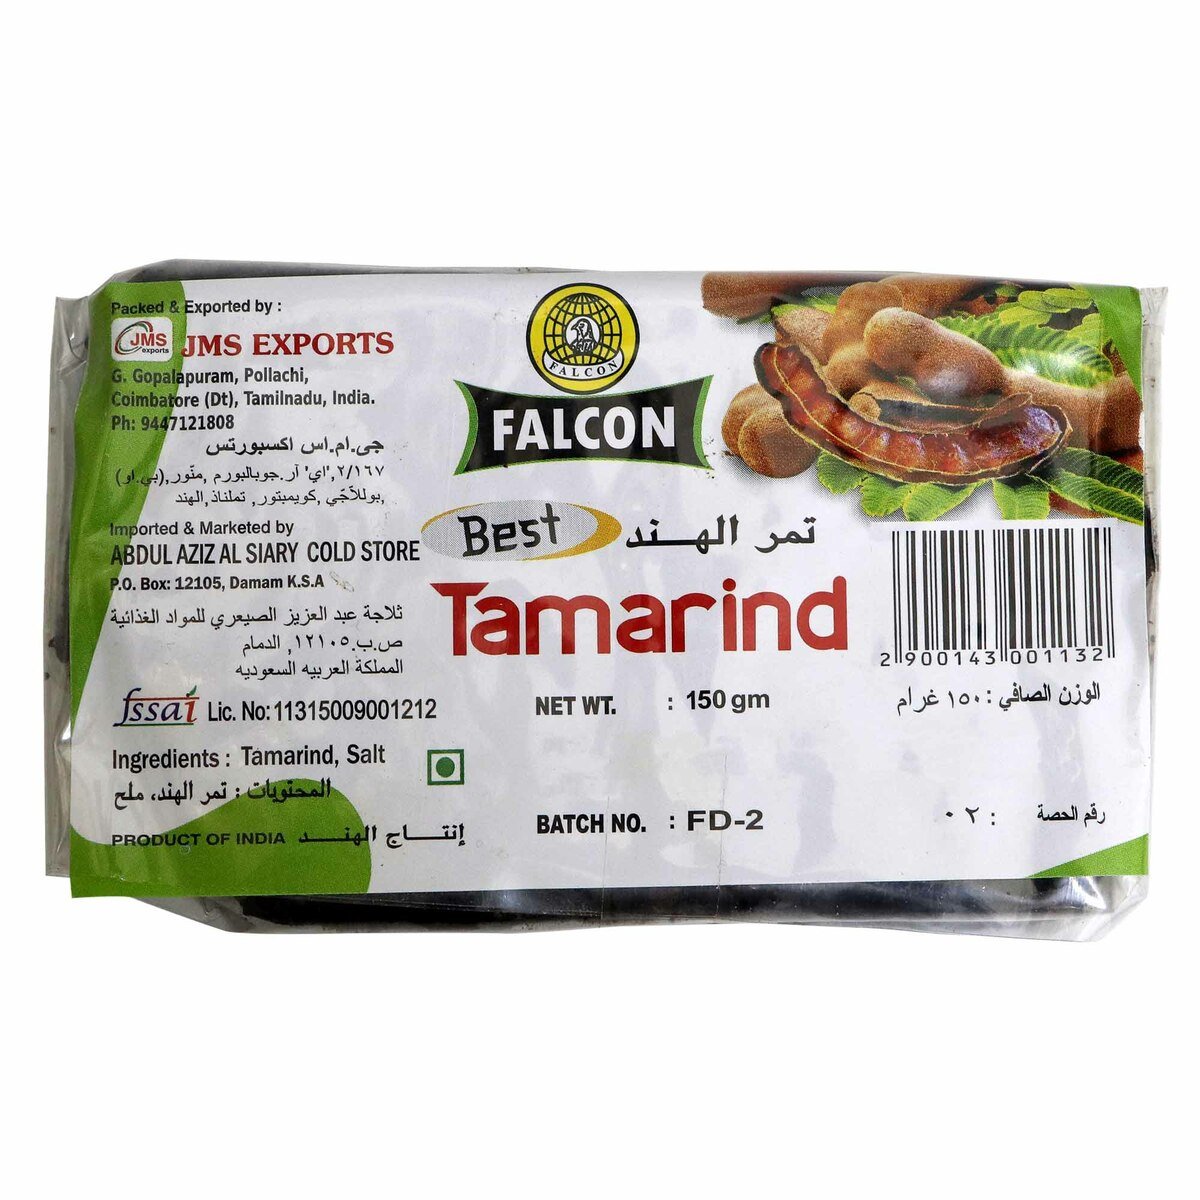 Falcon Tamarind 150g